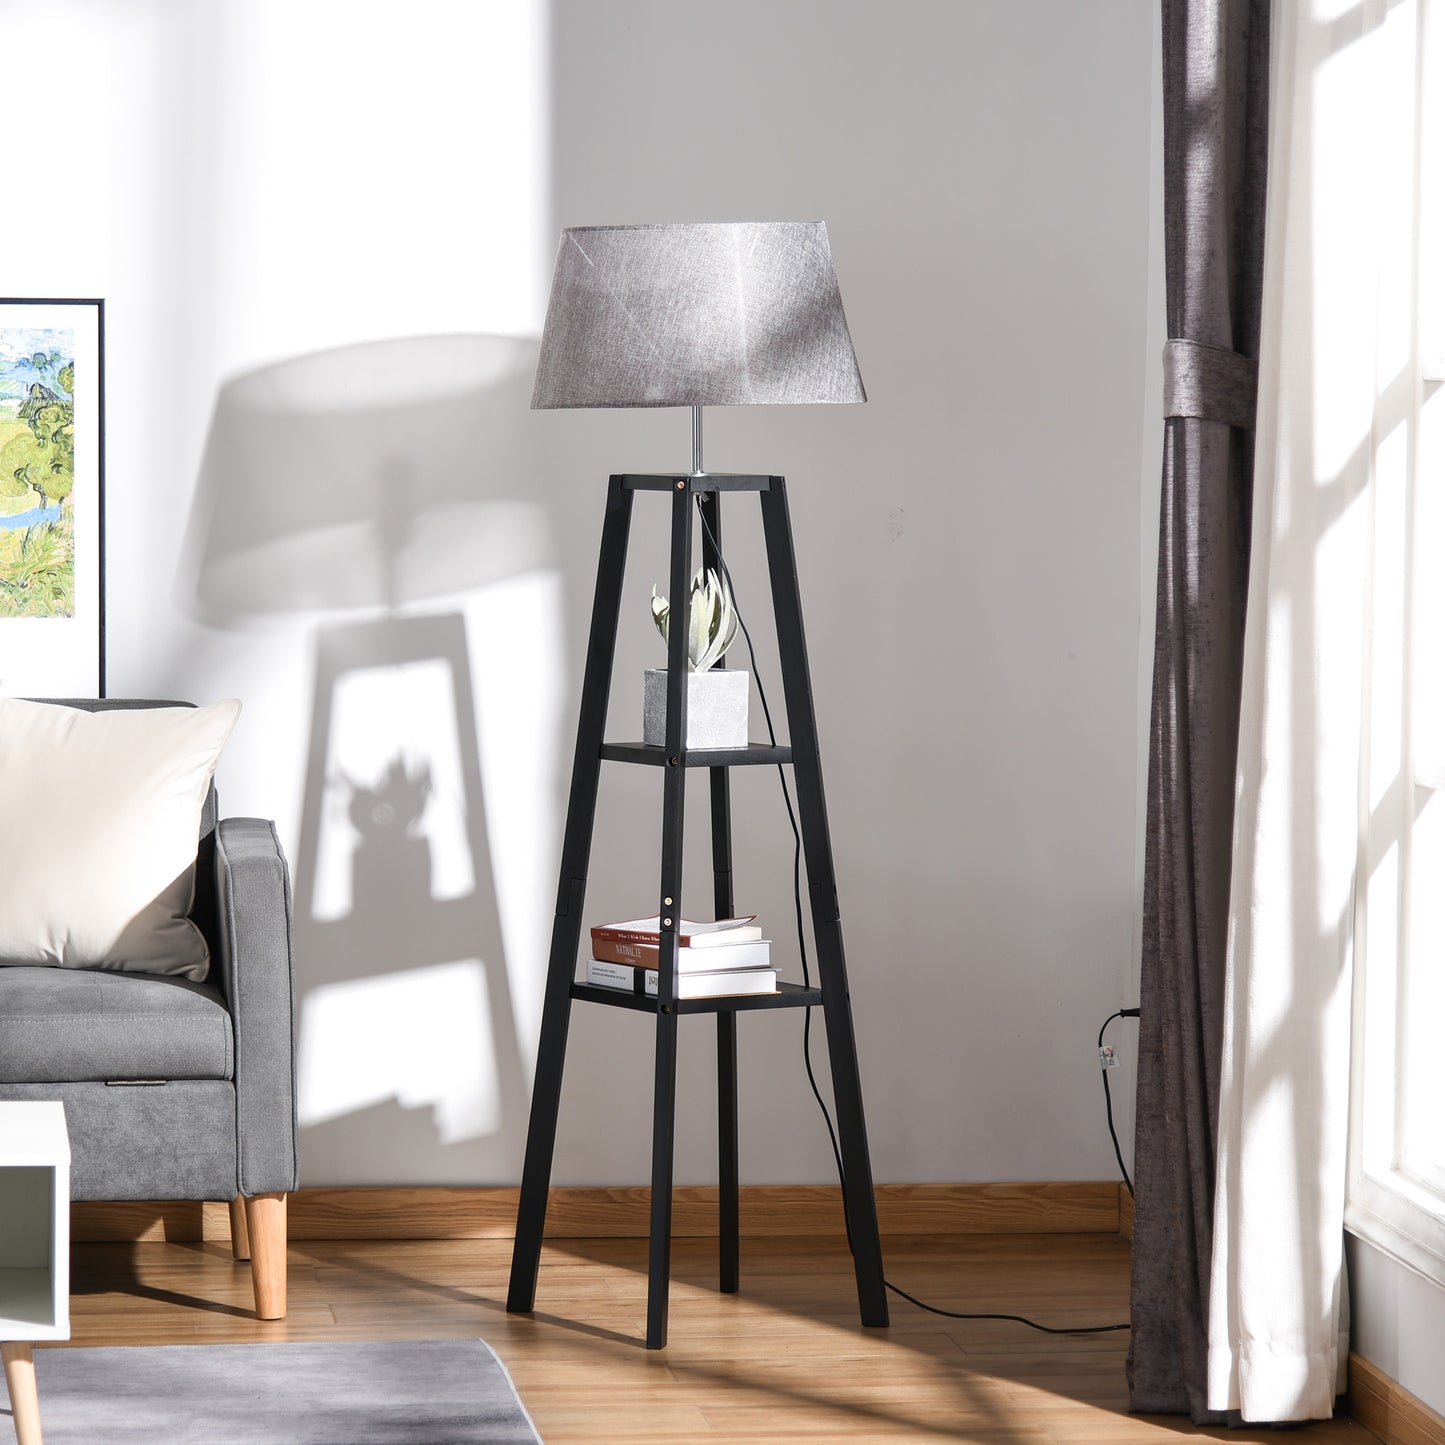 HOMCOM Modern Design Floor Lamp with Three Shelves and Linen Shade